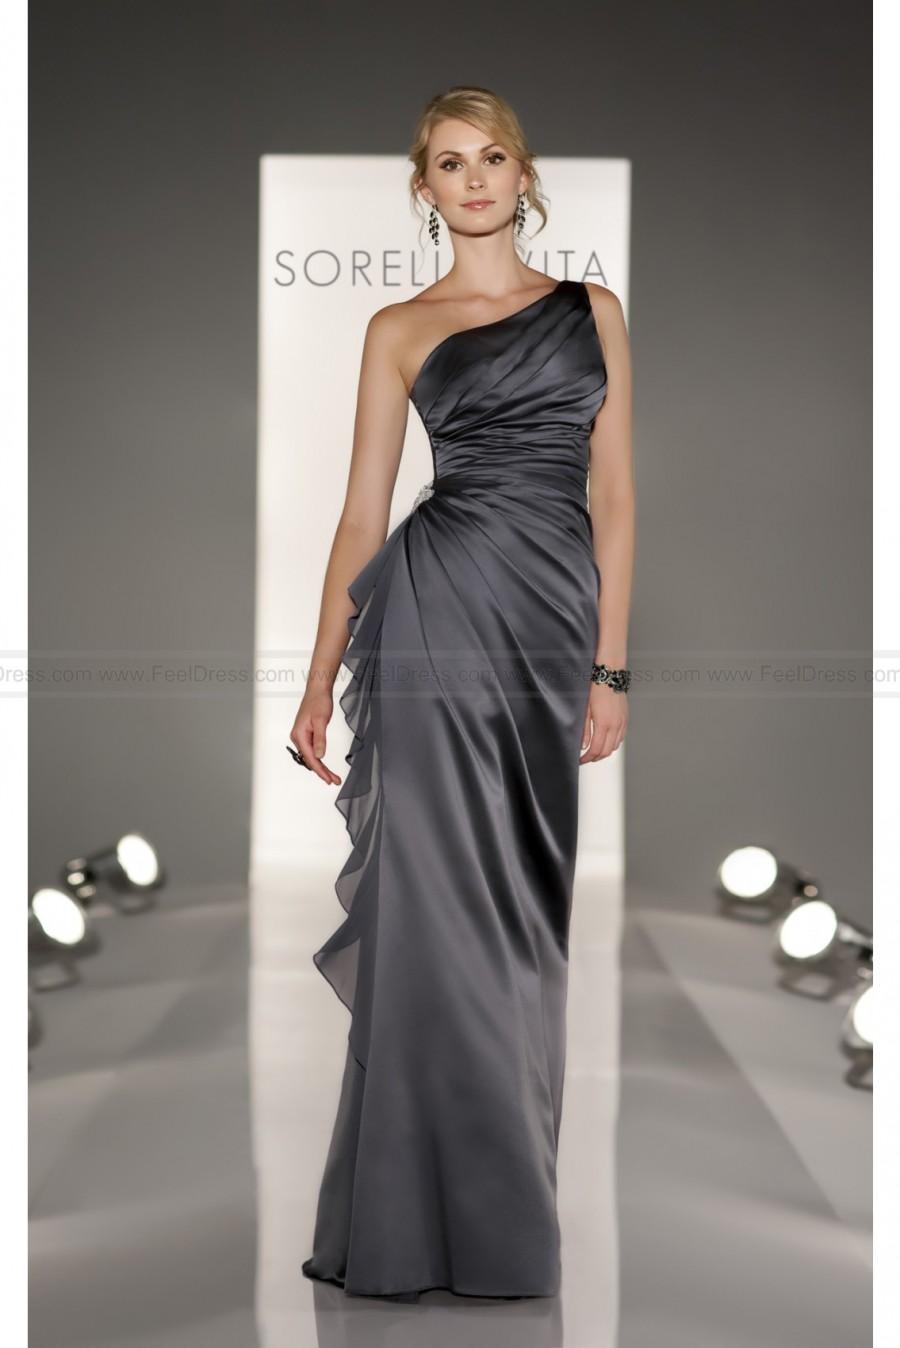 Wedding - Sorella Vita Grey Bridesmaid Dress Style 8191